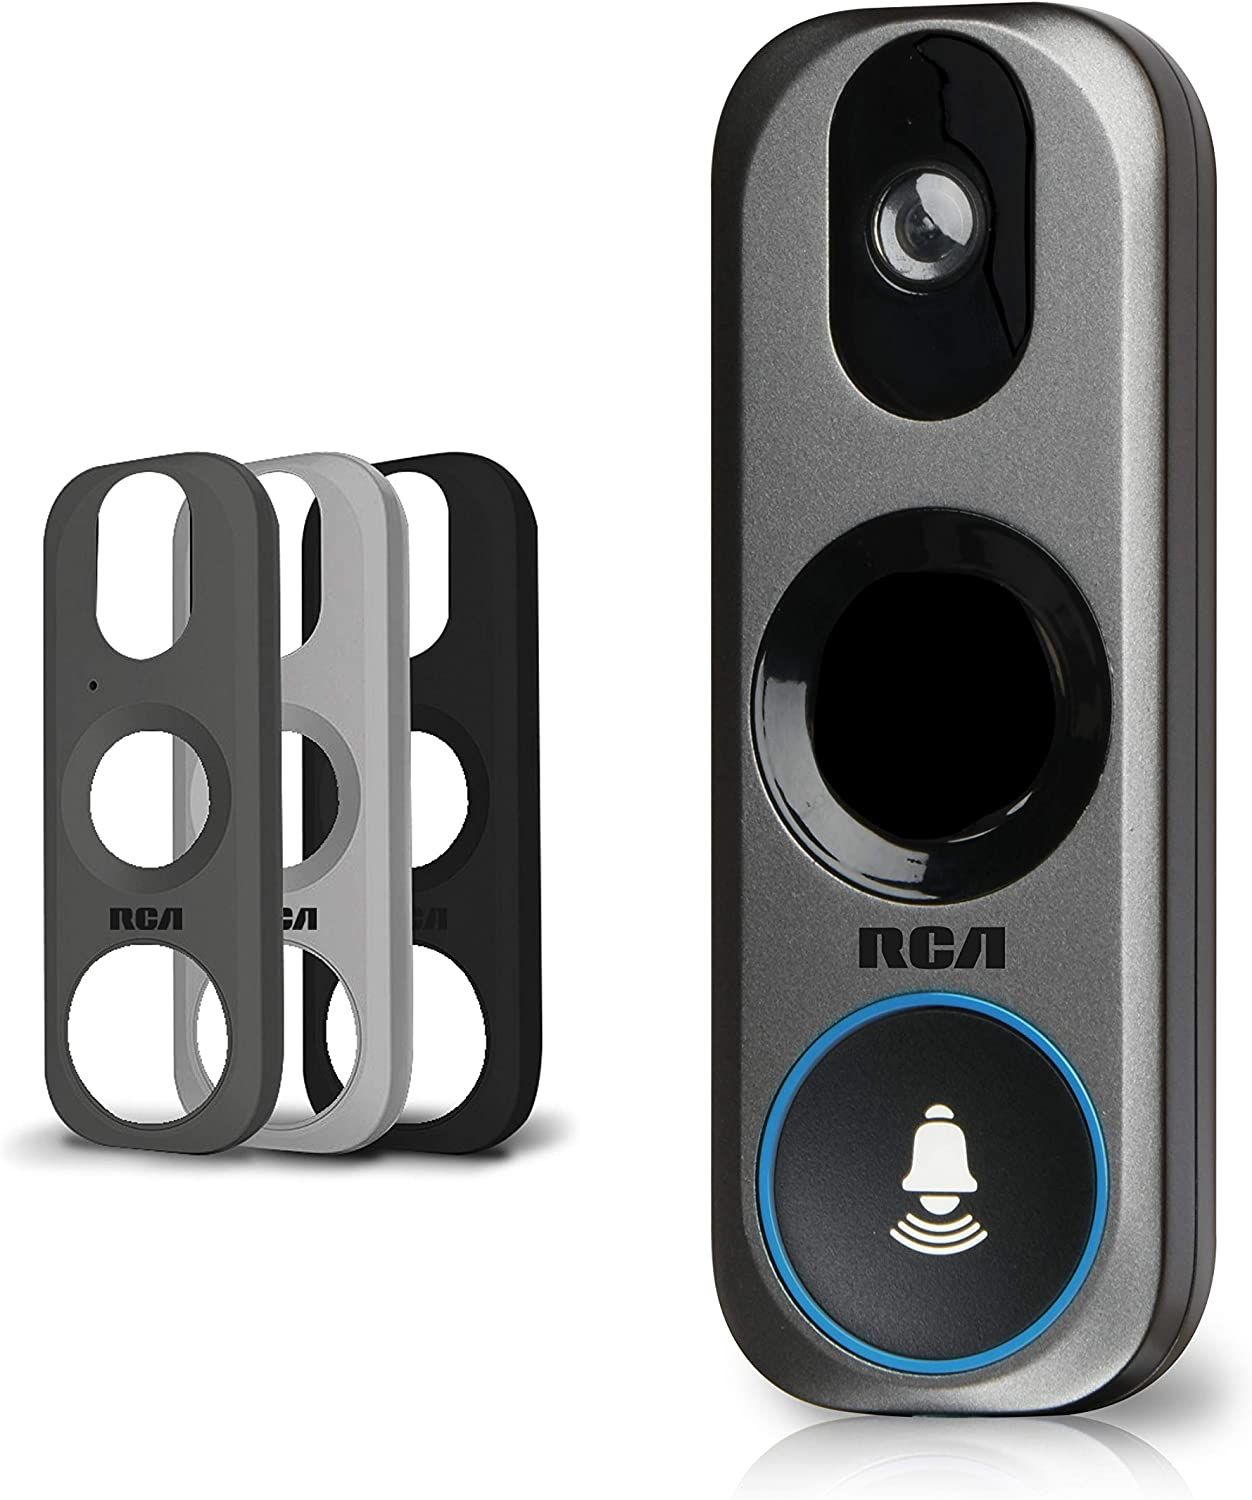 RCA Doorbell Security Camera 3